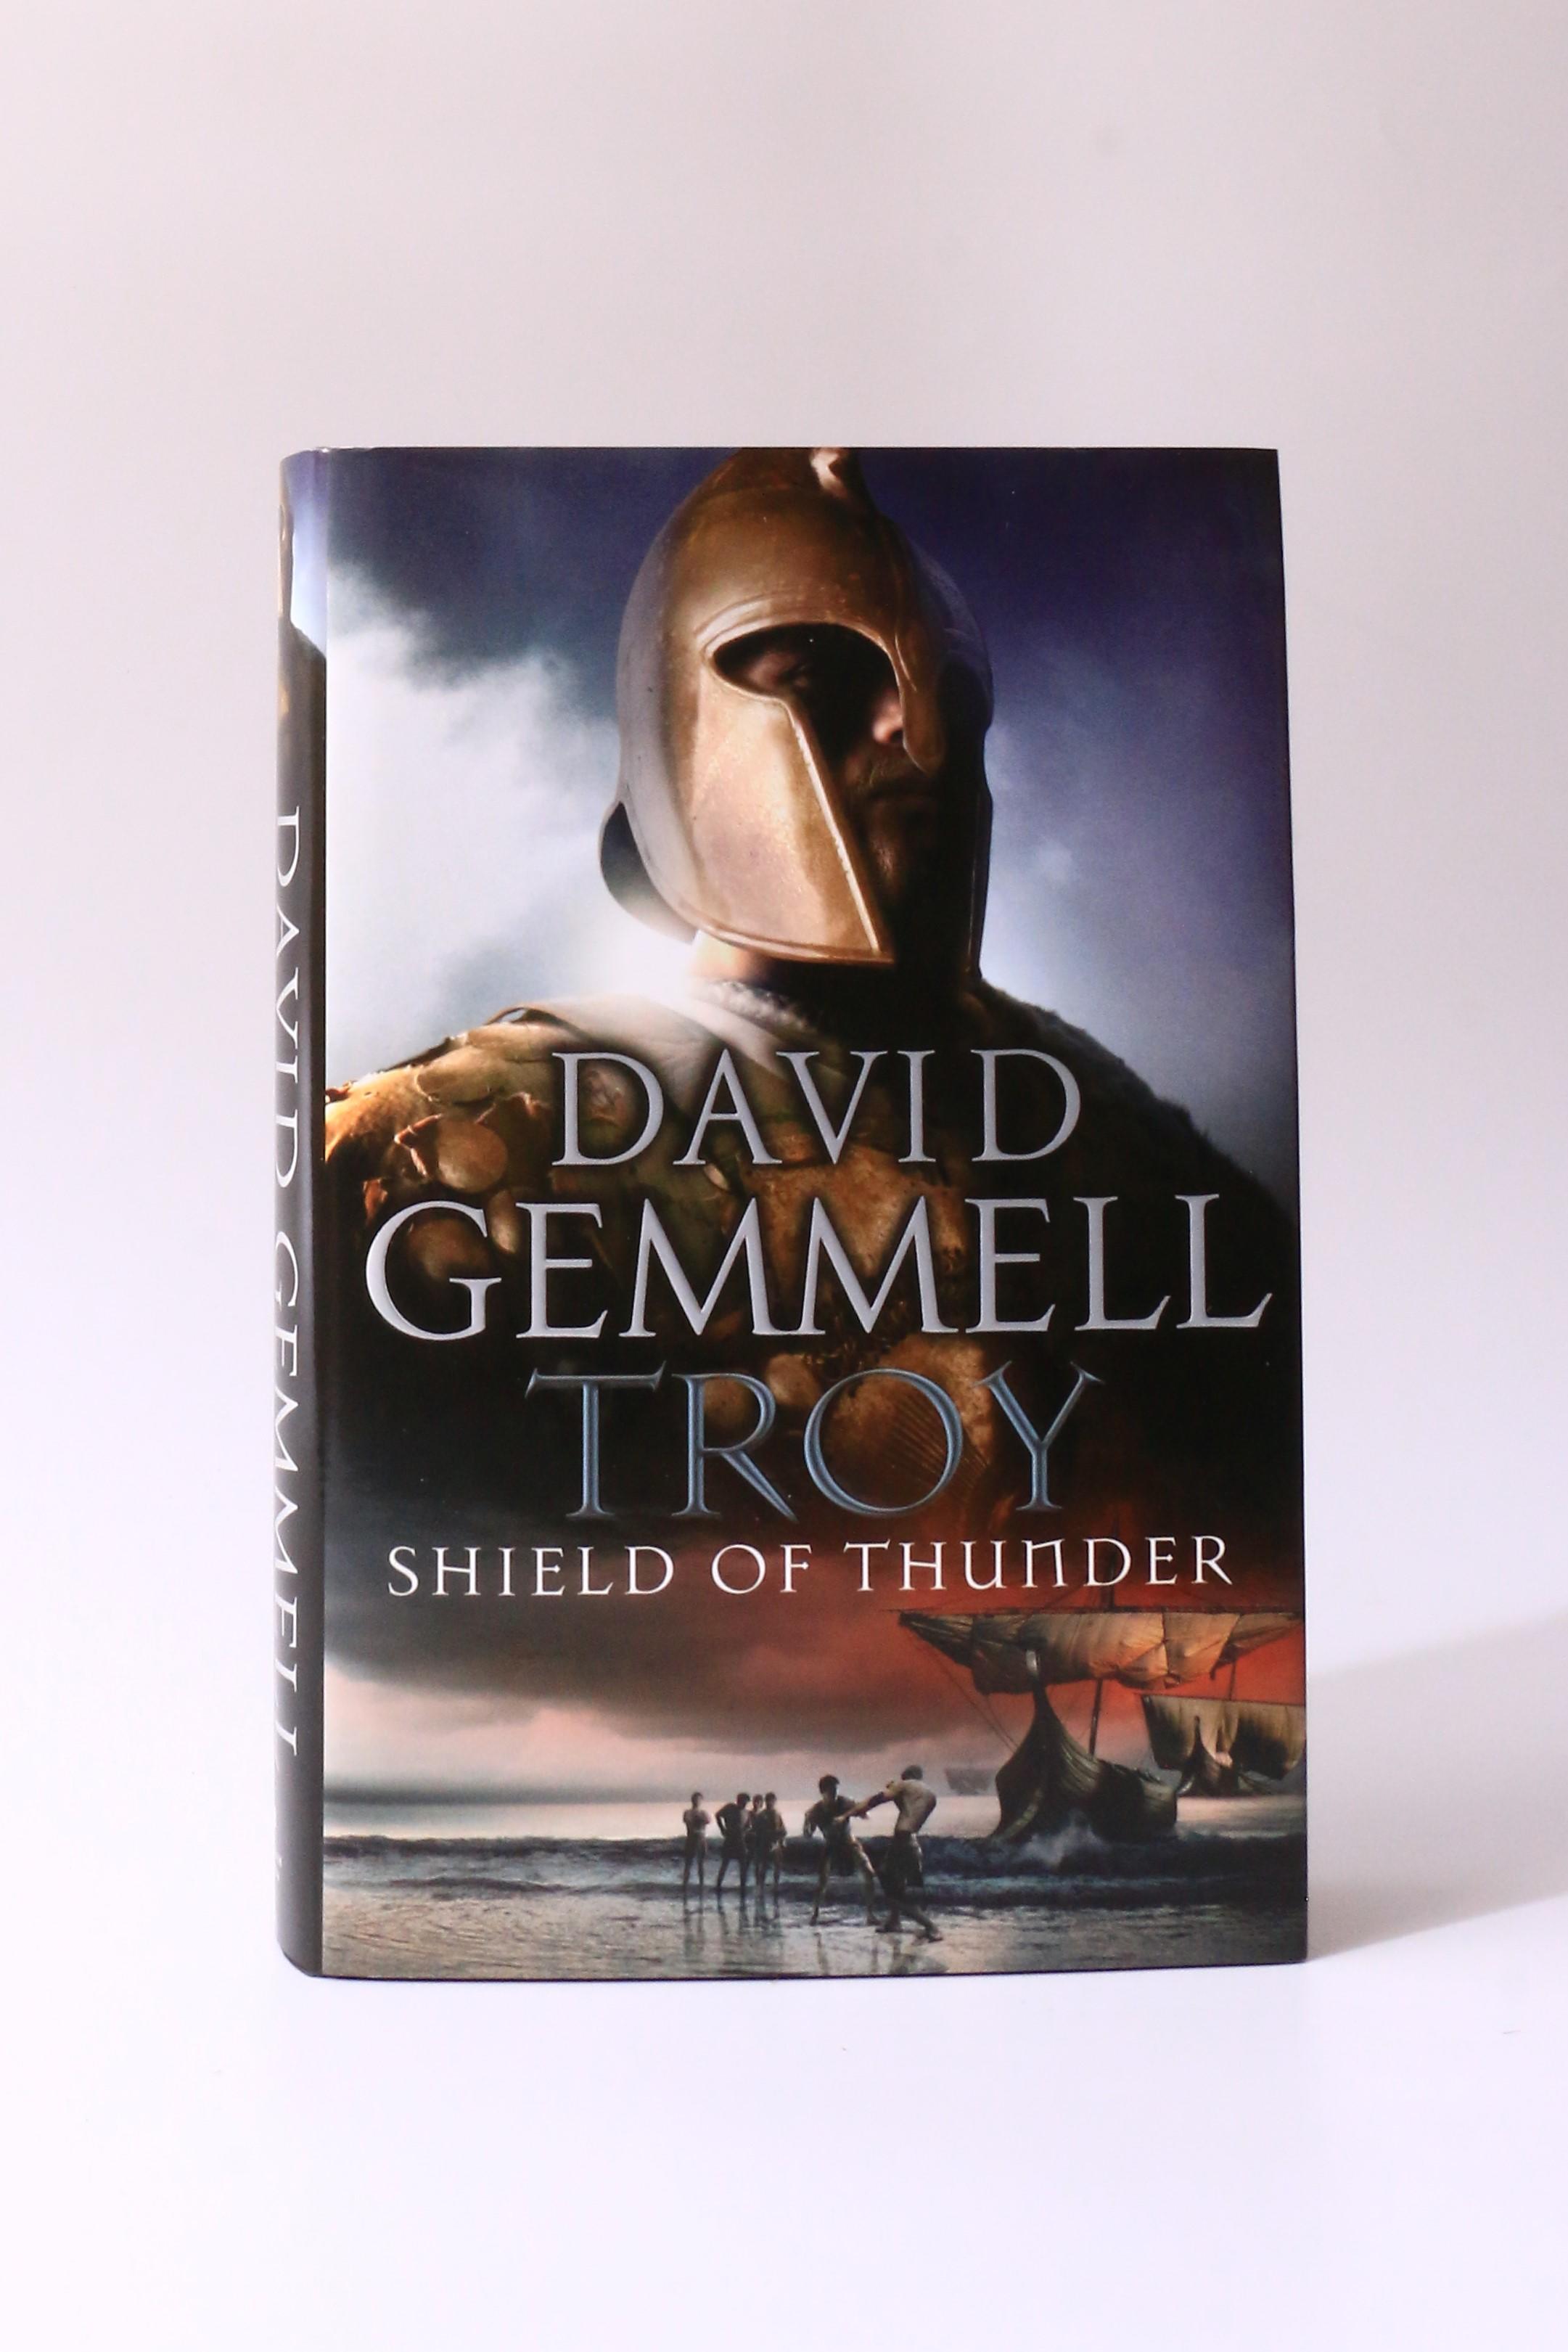 David Gemmell - Troy: Shield of Thunder - Bantam Press, 2006, First Edition.